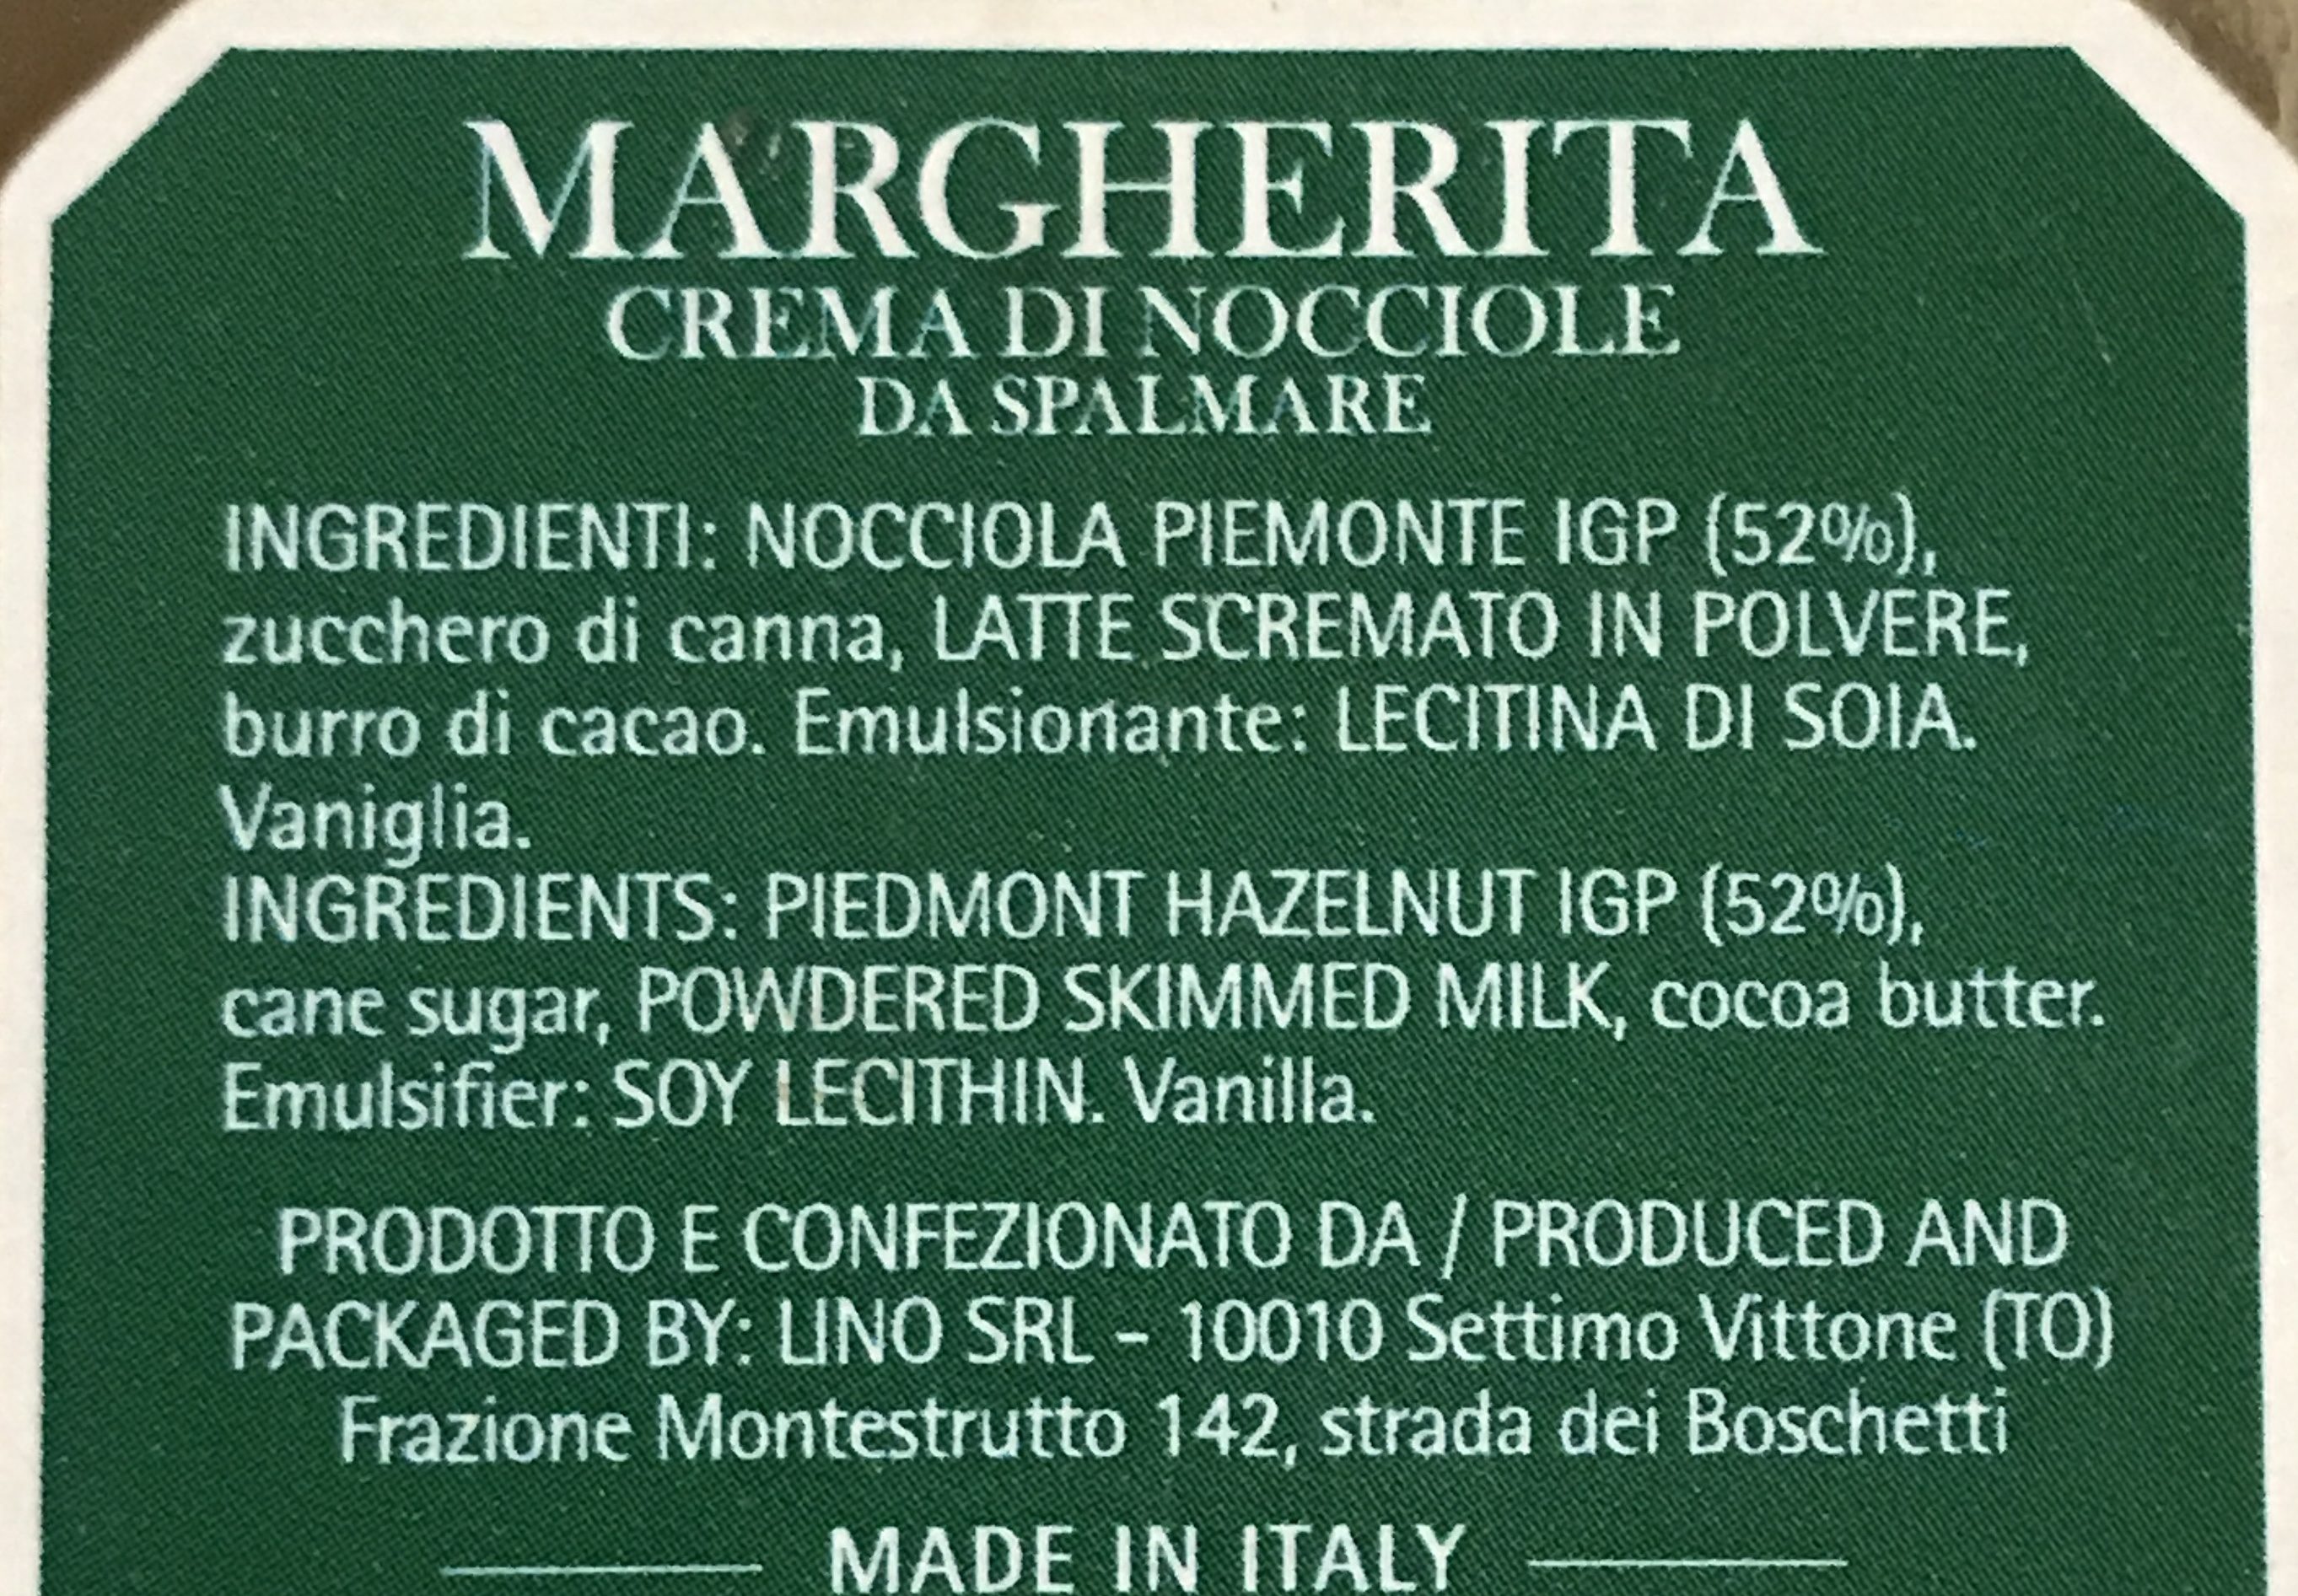 Haselnusscreme Margherita crema di nocciole - Ingredients - fr